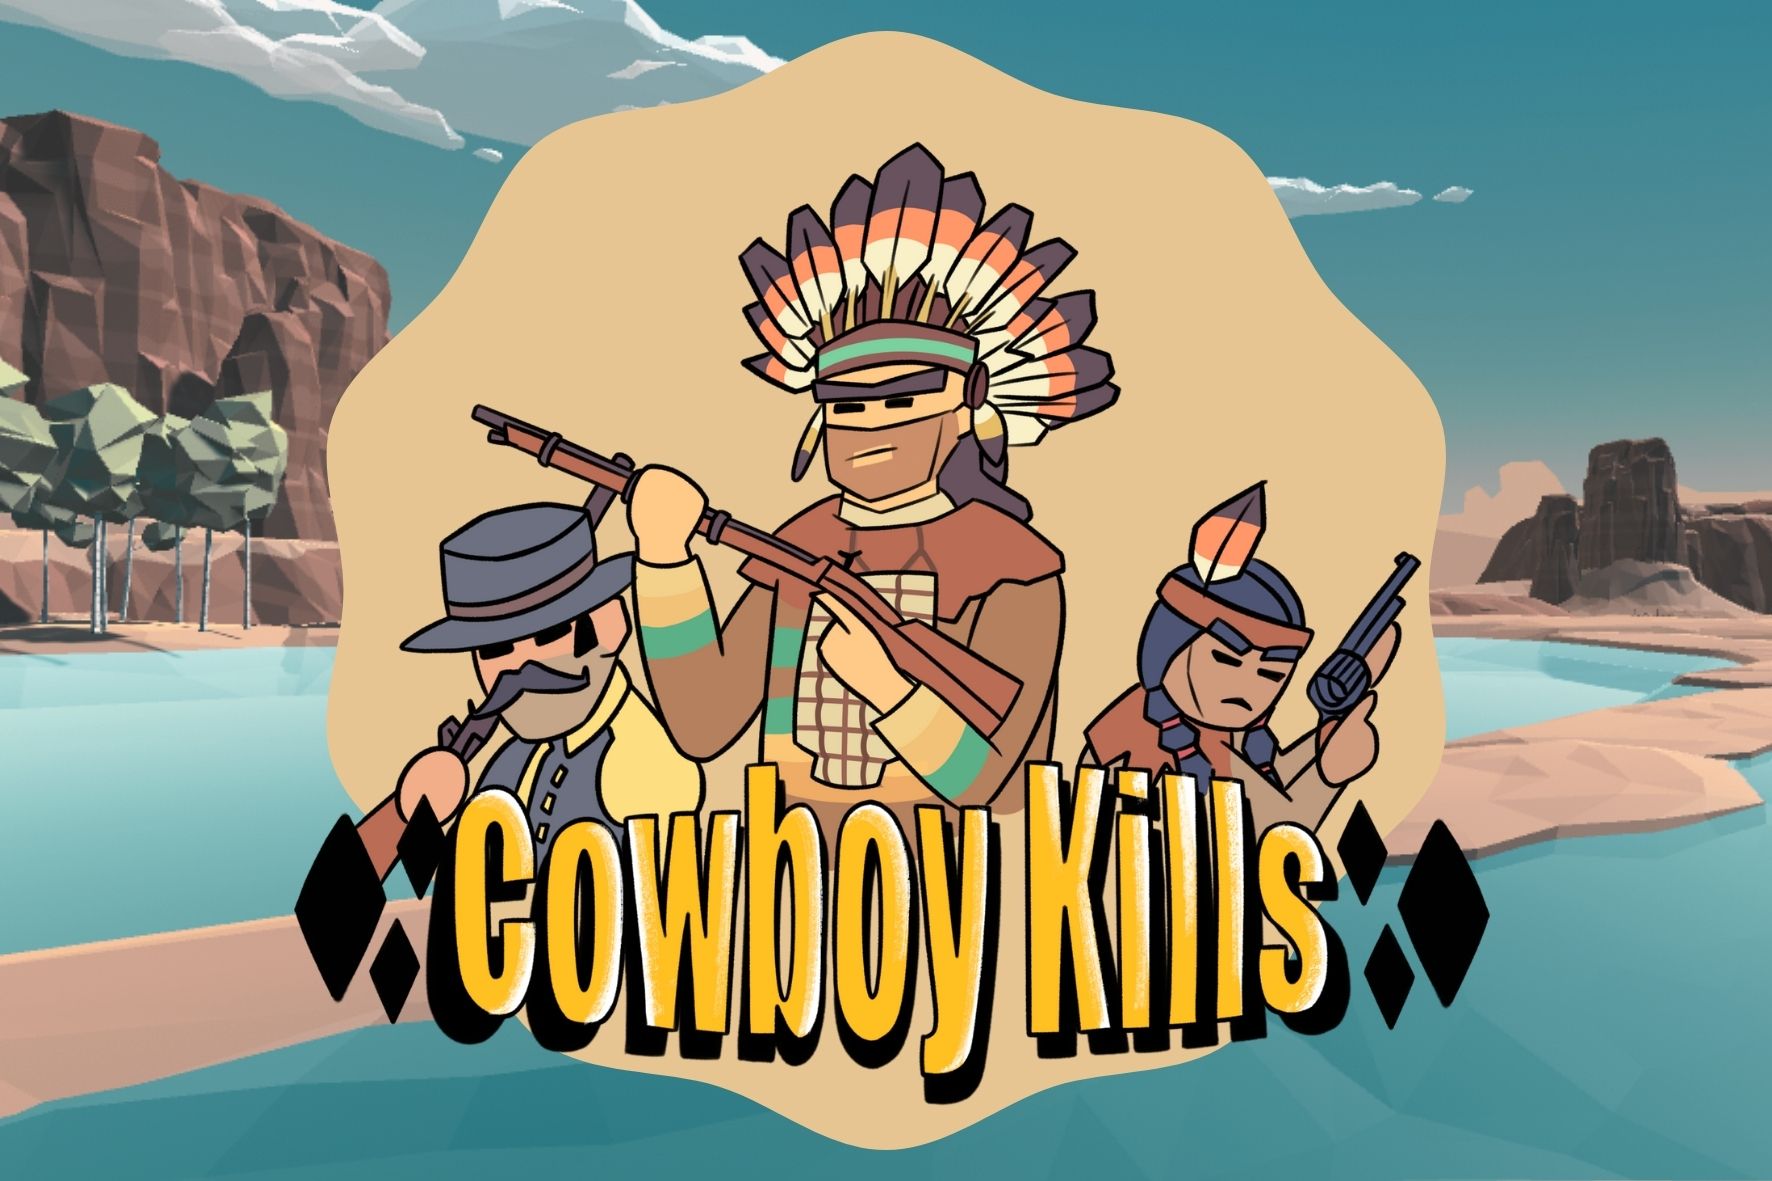 Cowboy Kills - Game